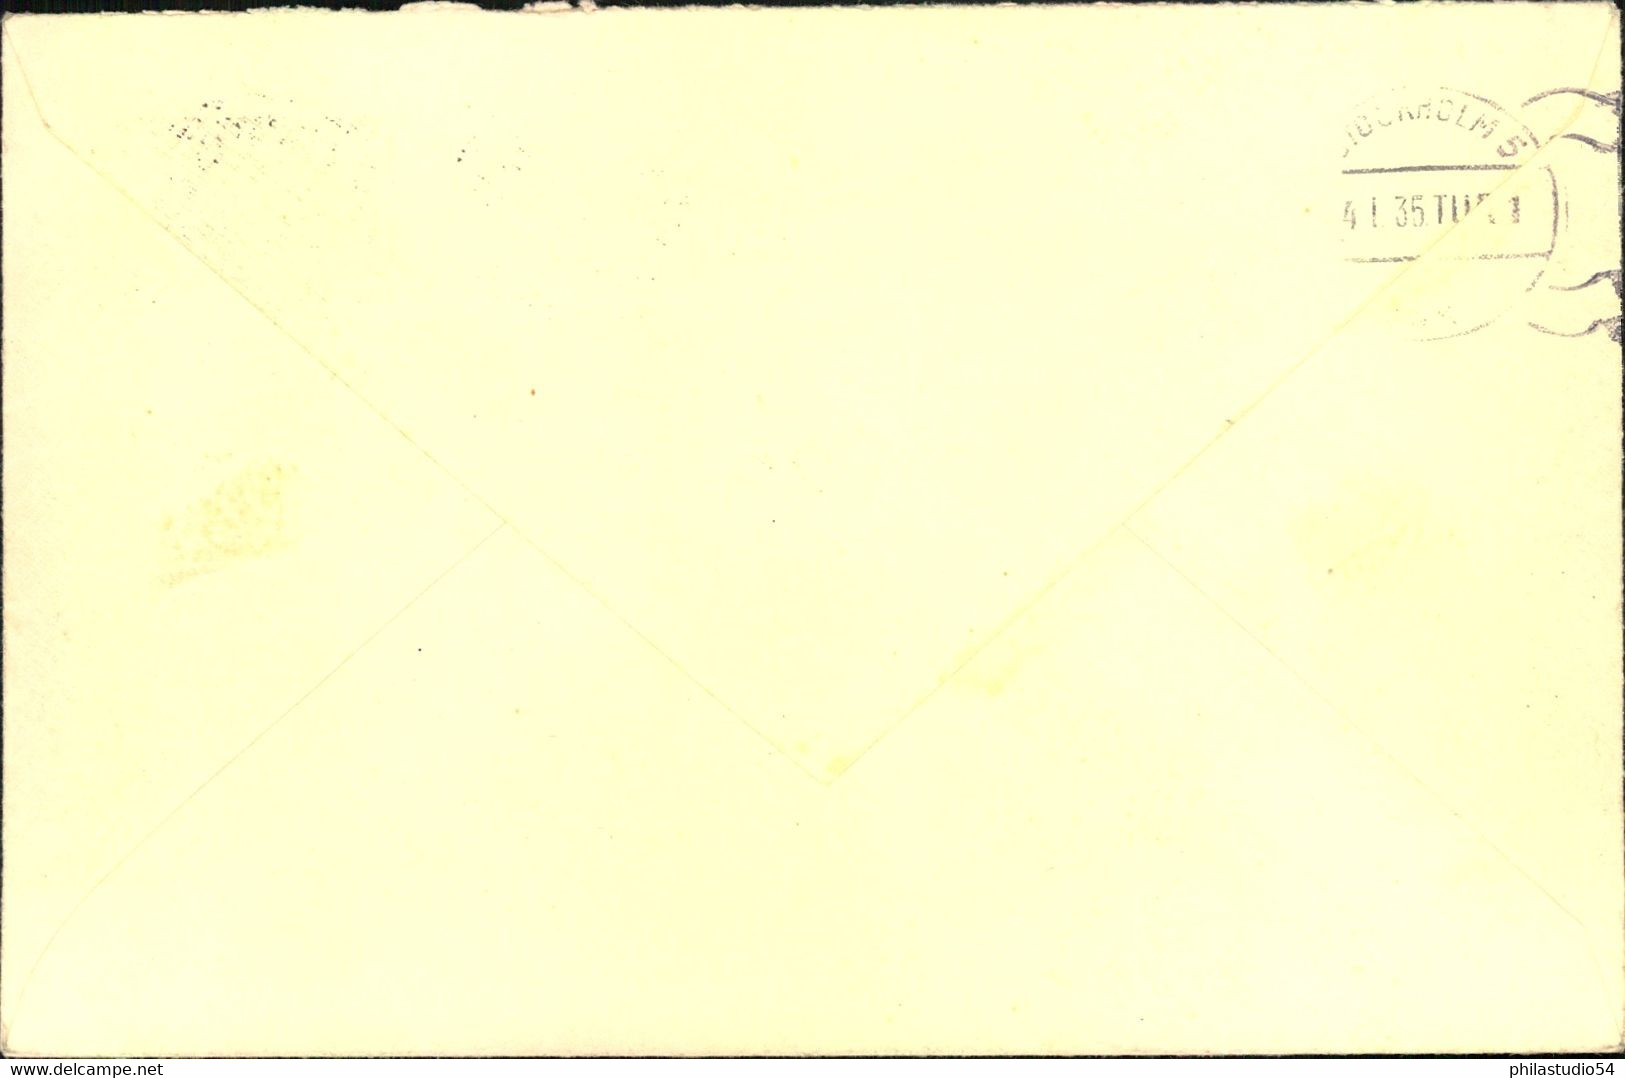 1935, Brief Mit Absender "SVENSKA BATALJONEN - SAAR" Nach Stockholm, Mit Ankunftsstempel - Briefe U. Dokumente